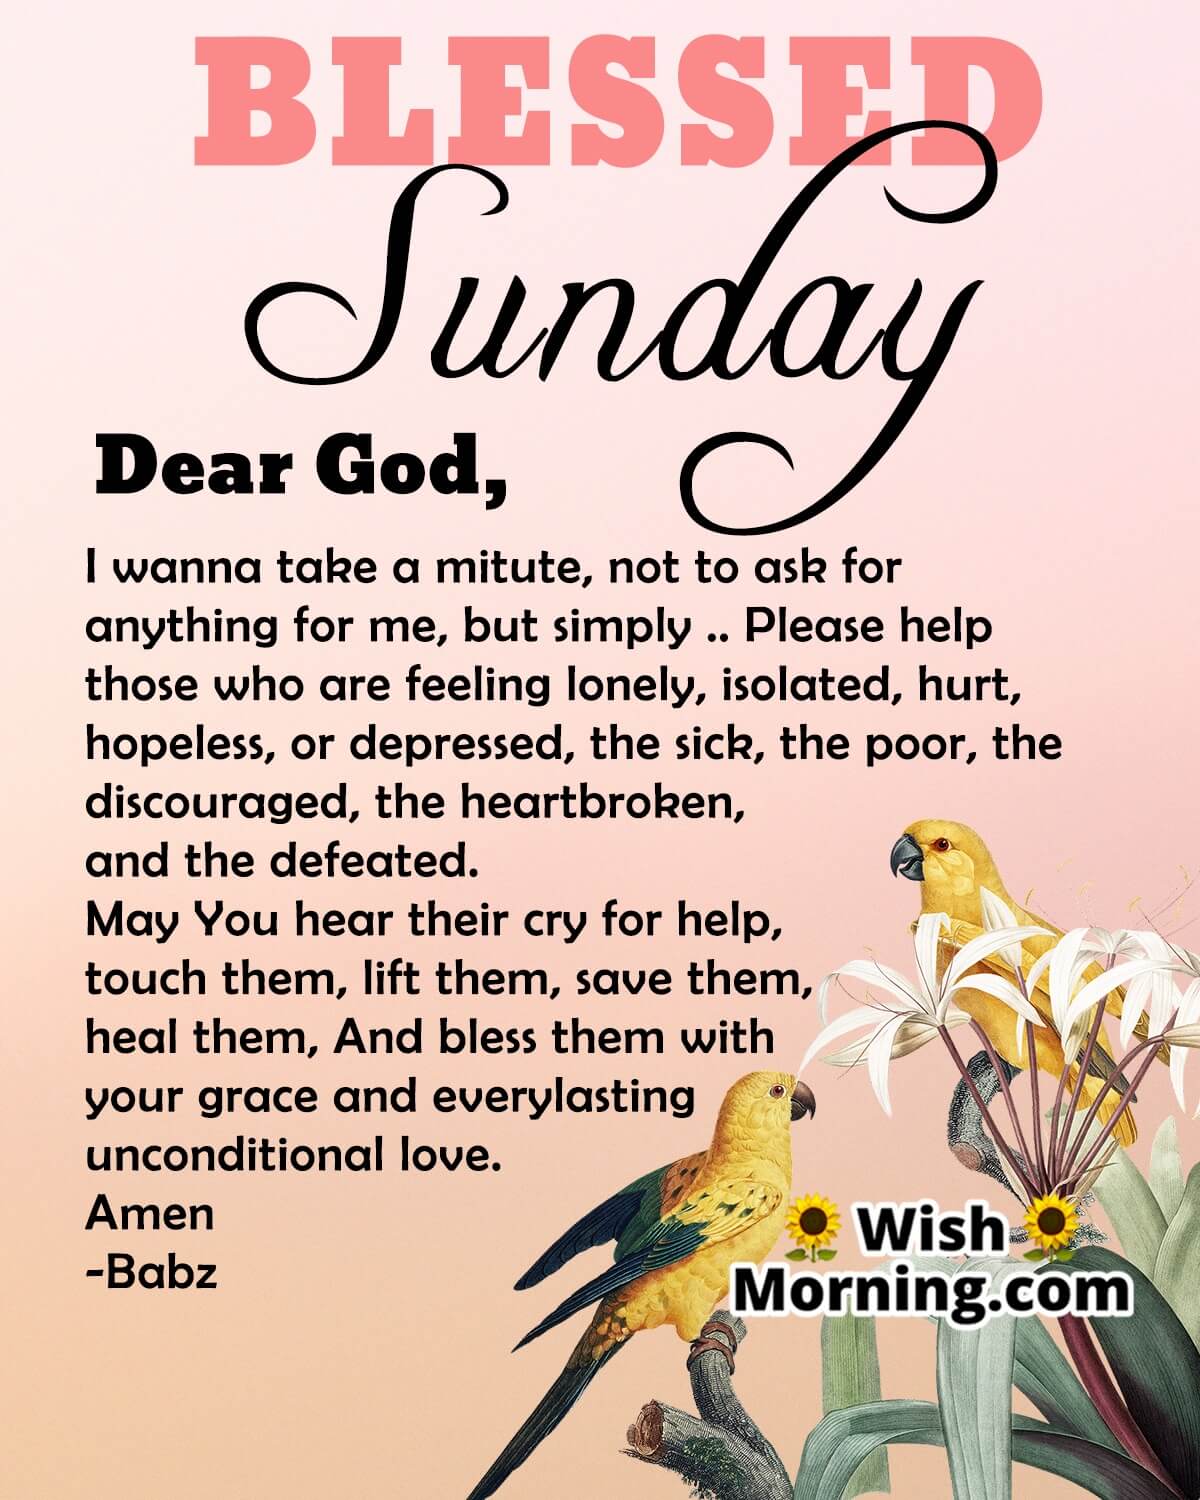 Best Sunday Morning Quotes Wishes - Wish Morning